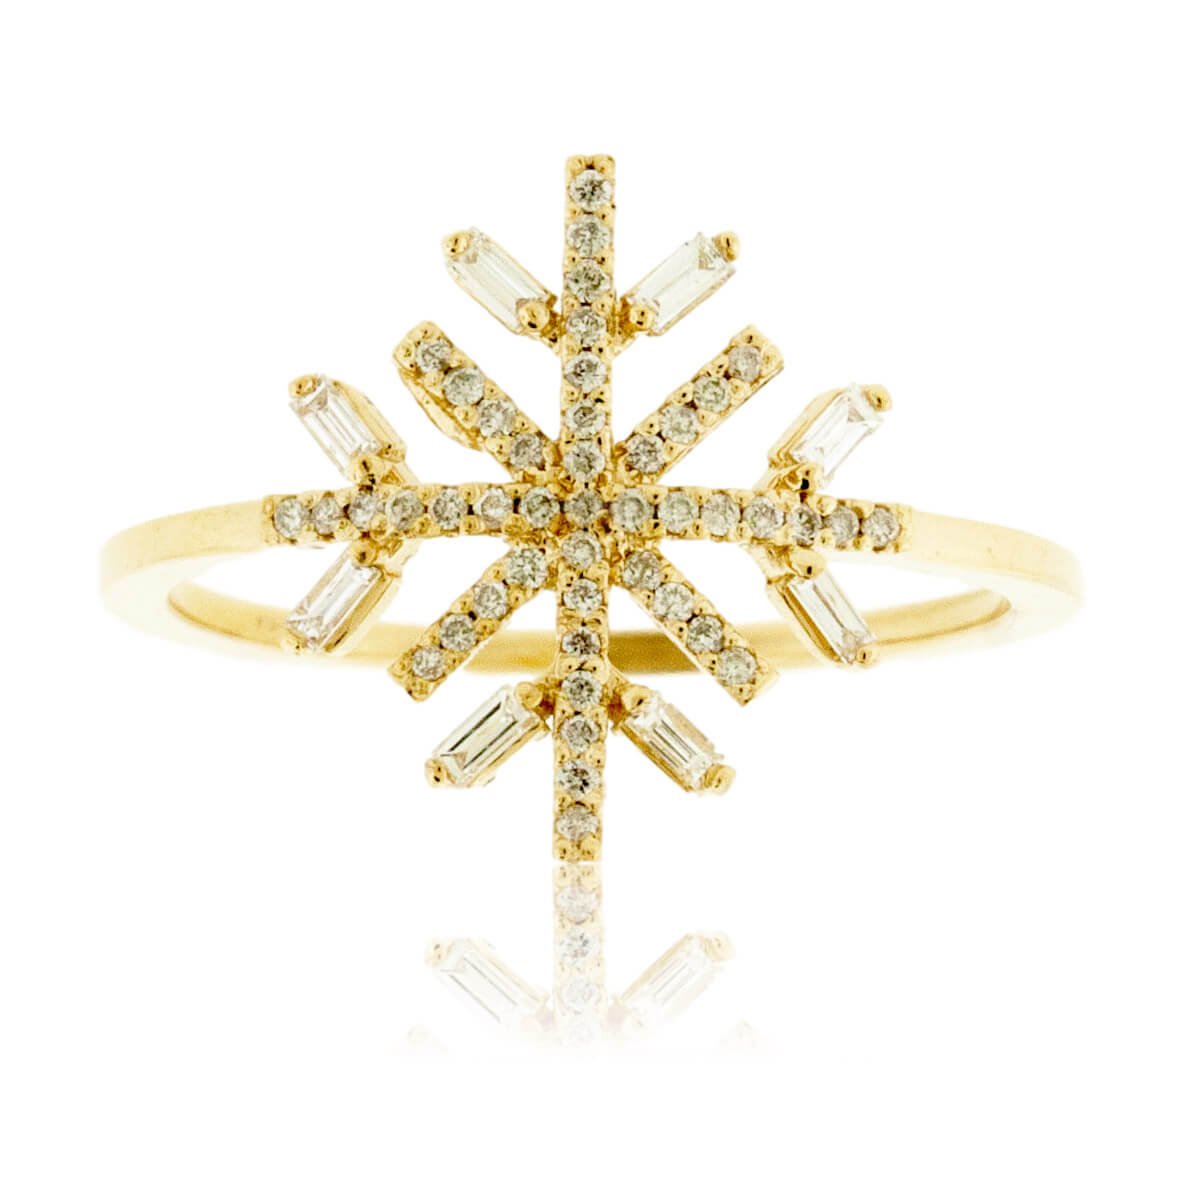 Circle Ring - Buy Exquisite 24 Karat Jewelry | Cevherun